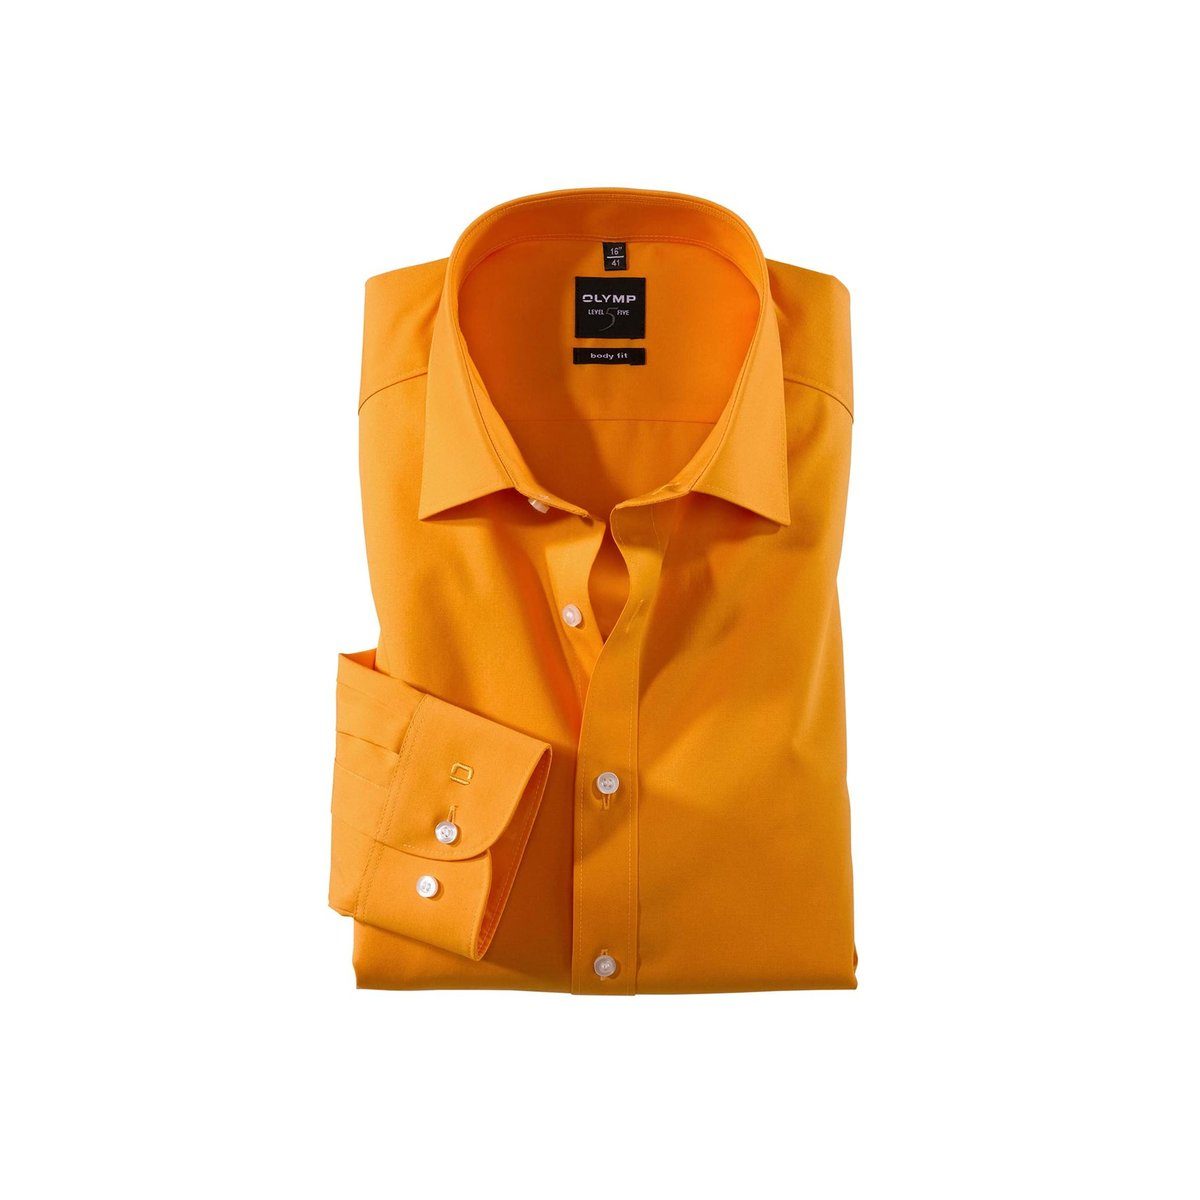 OLYMP Unterhemd 1-St., (keine Angabe) hellorange Angabe, orange keine